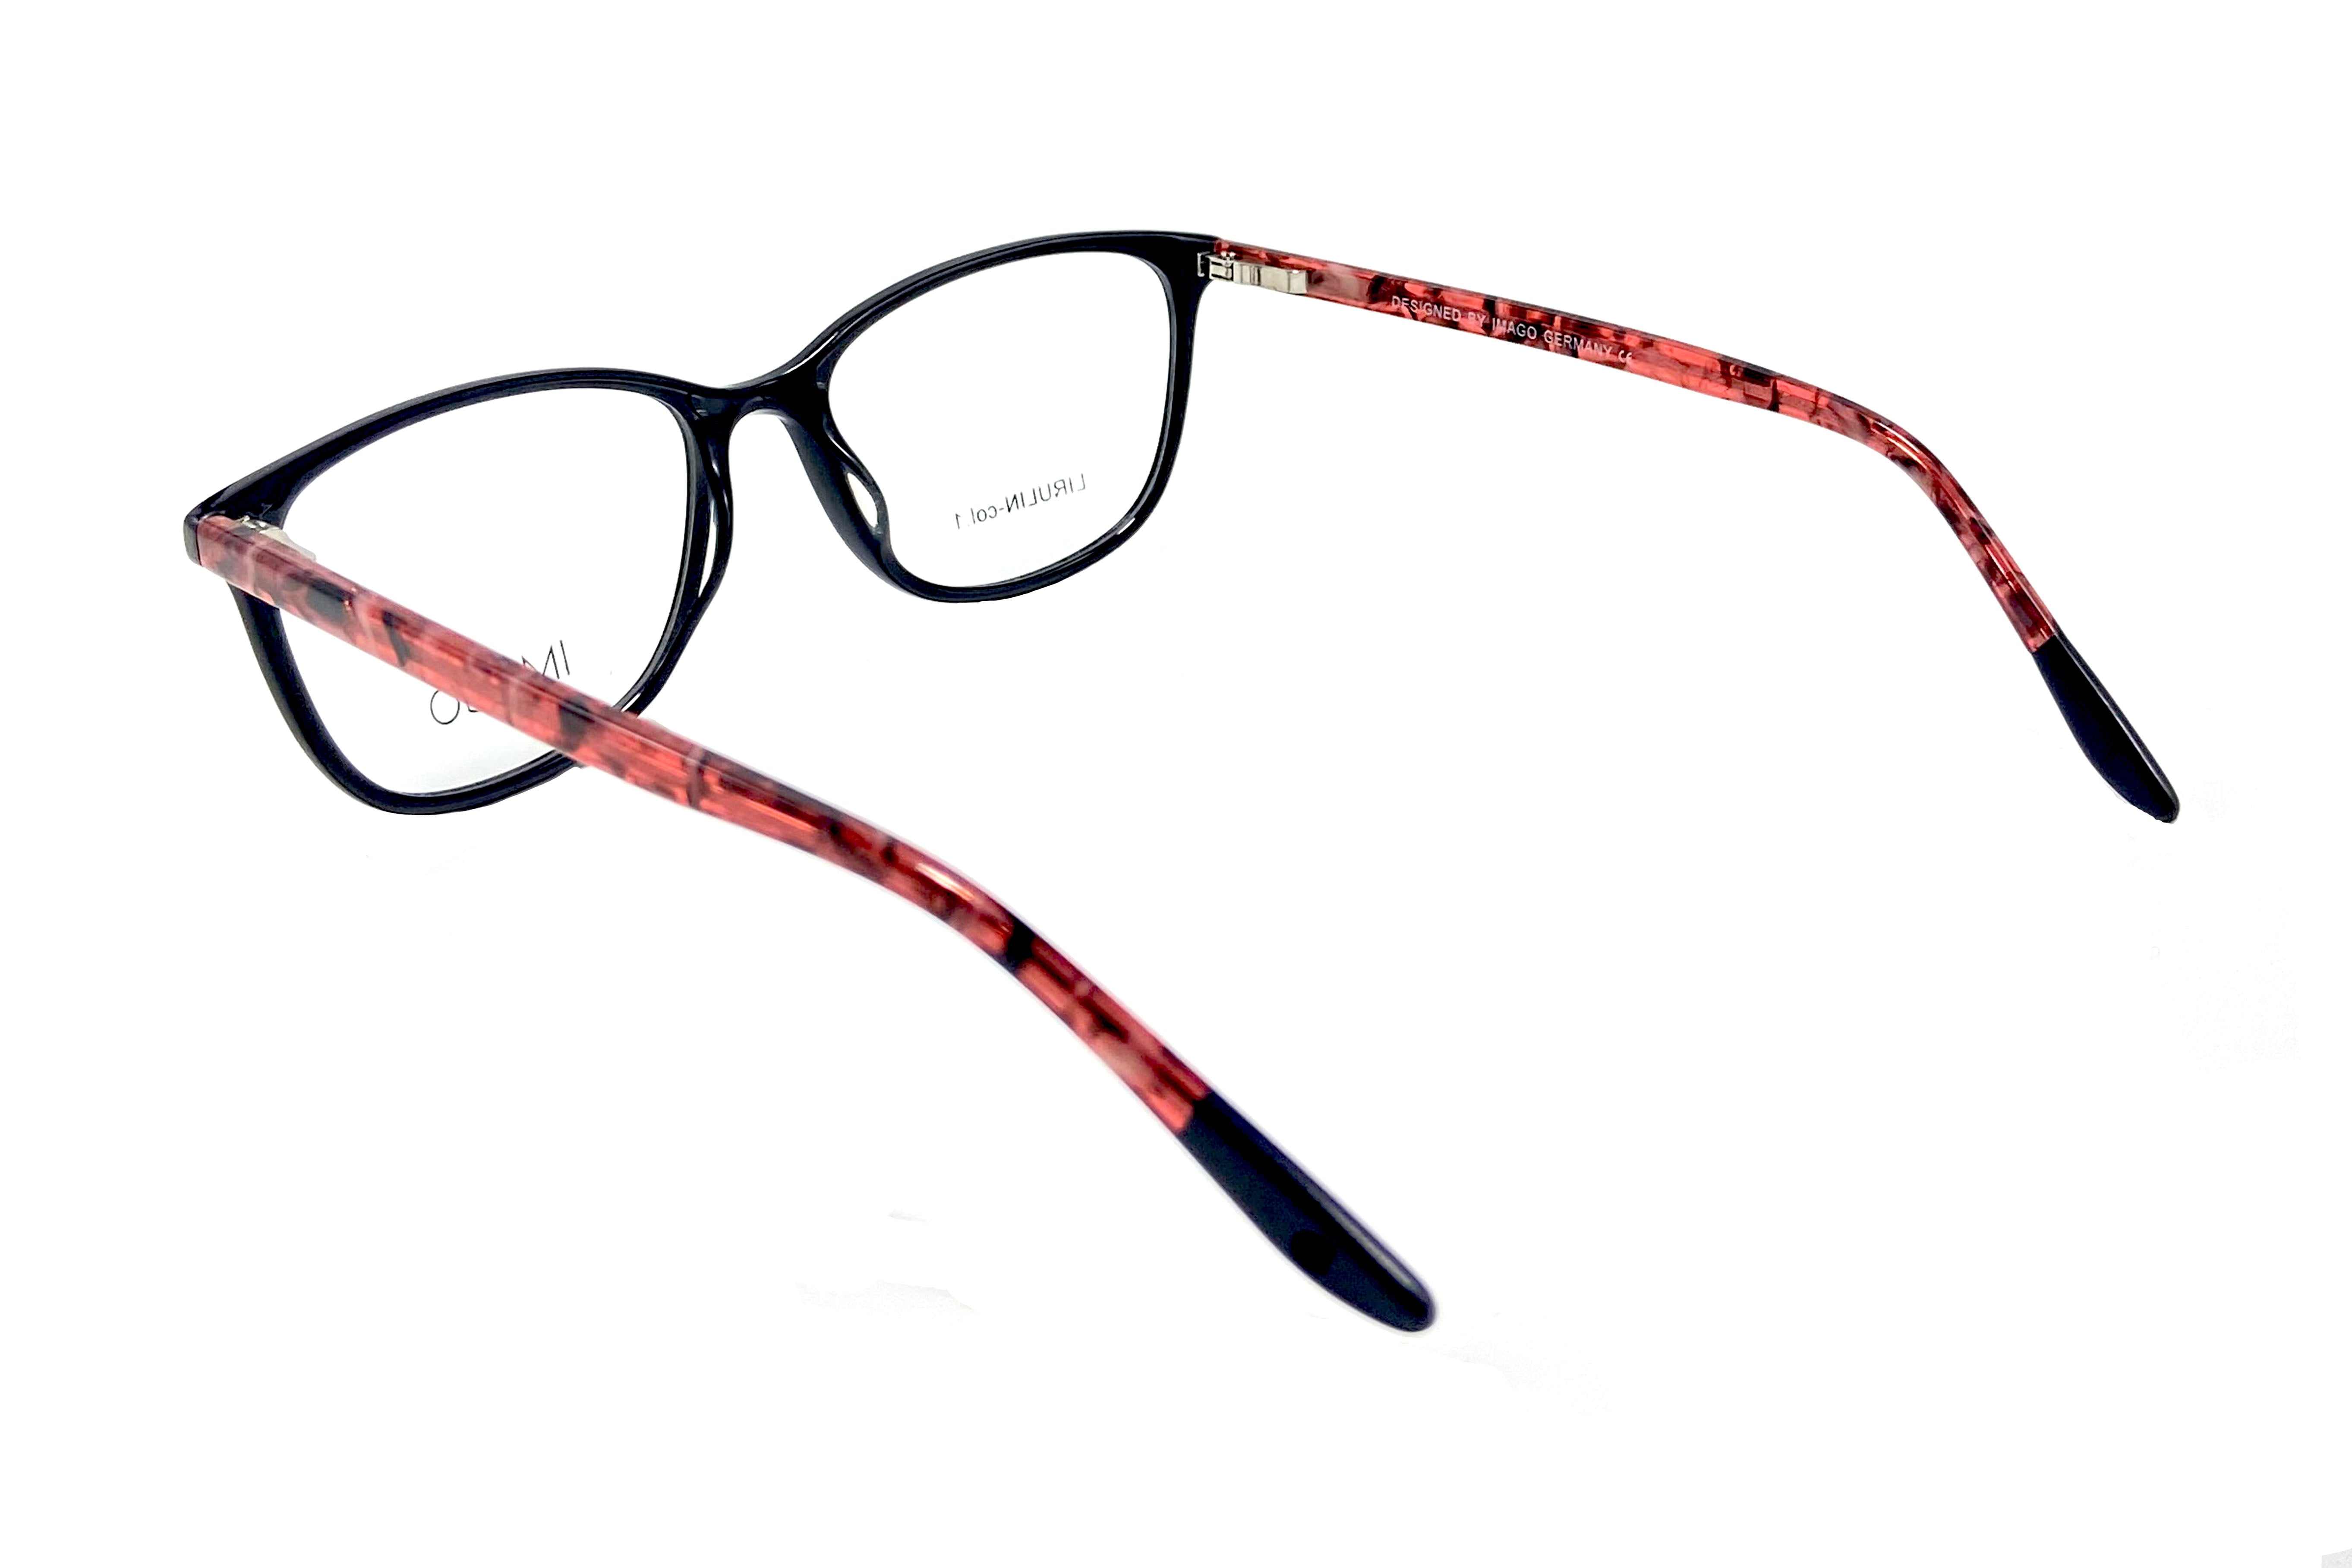 NS Deluxe - Lirulin - Black Red - Eyeglasses